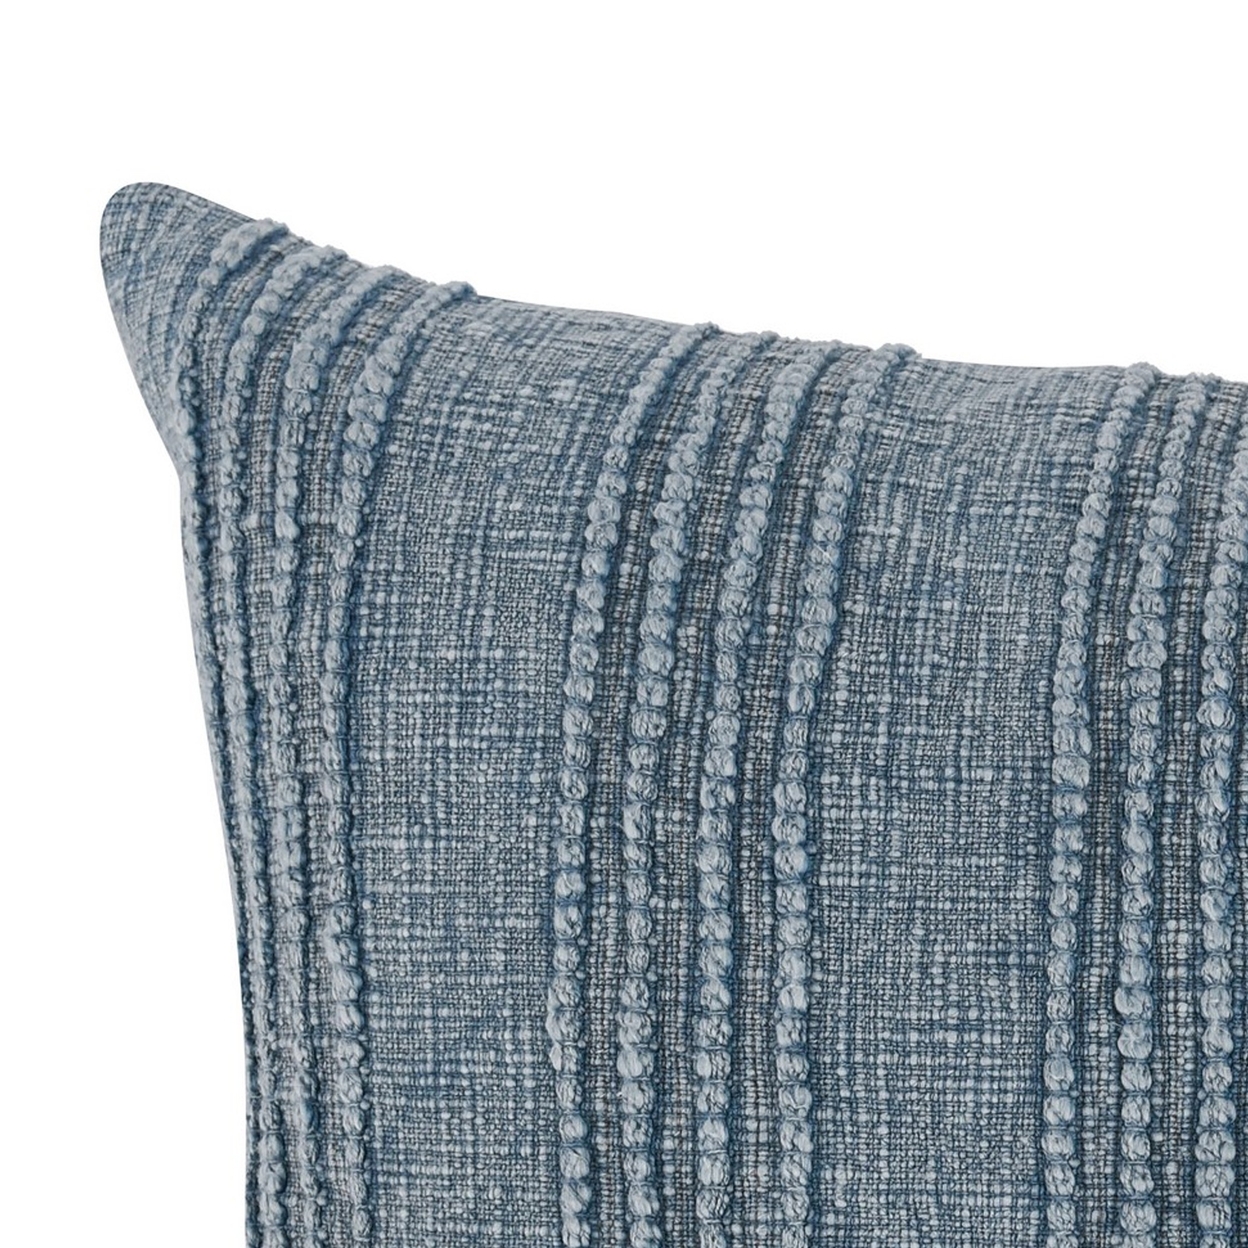 22 X 22 Accent Throw Pillow, Down, Textured Woven Striped Design, Blue- Saltoro Sherpi